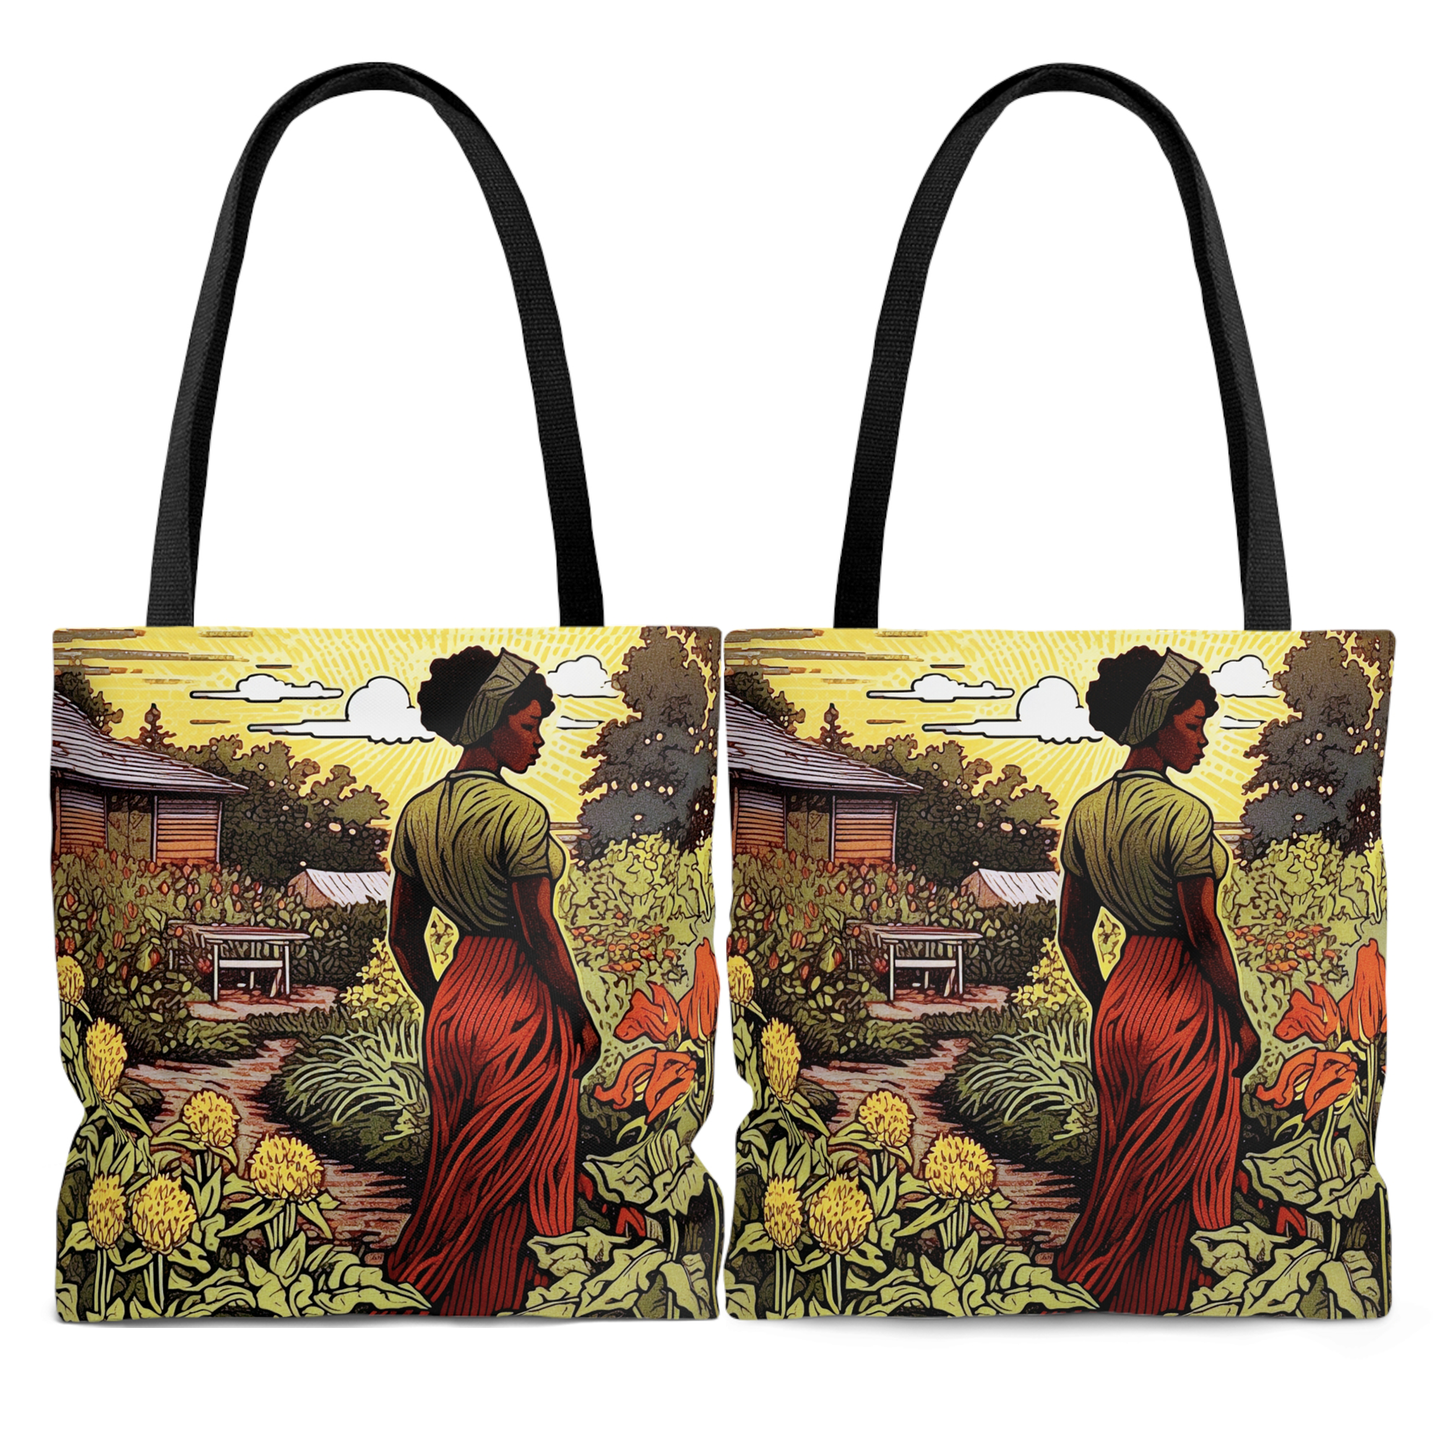 Woman in Garden Tote Bag